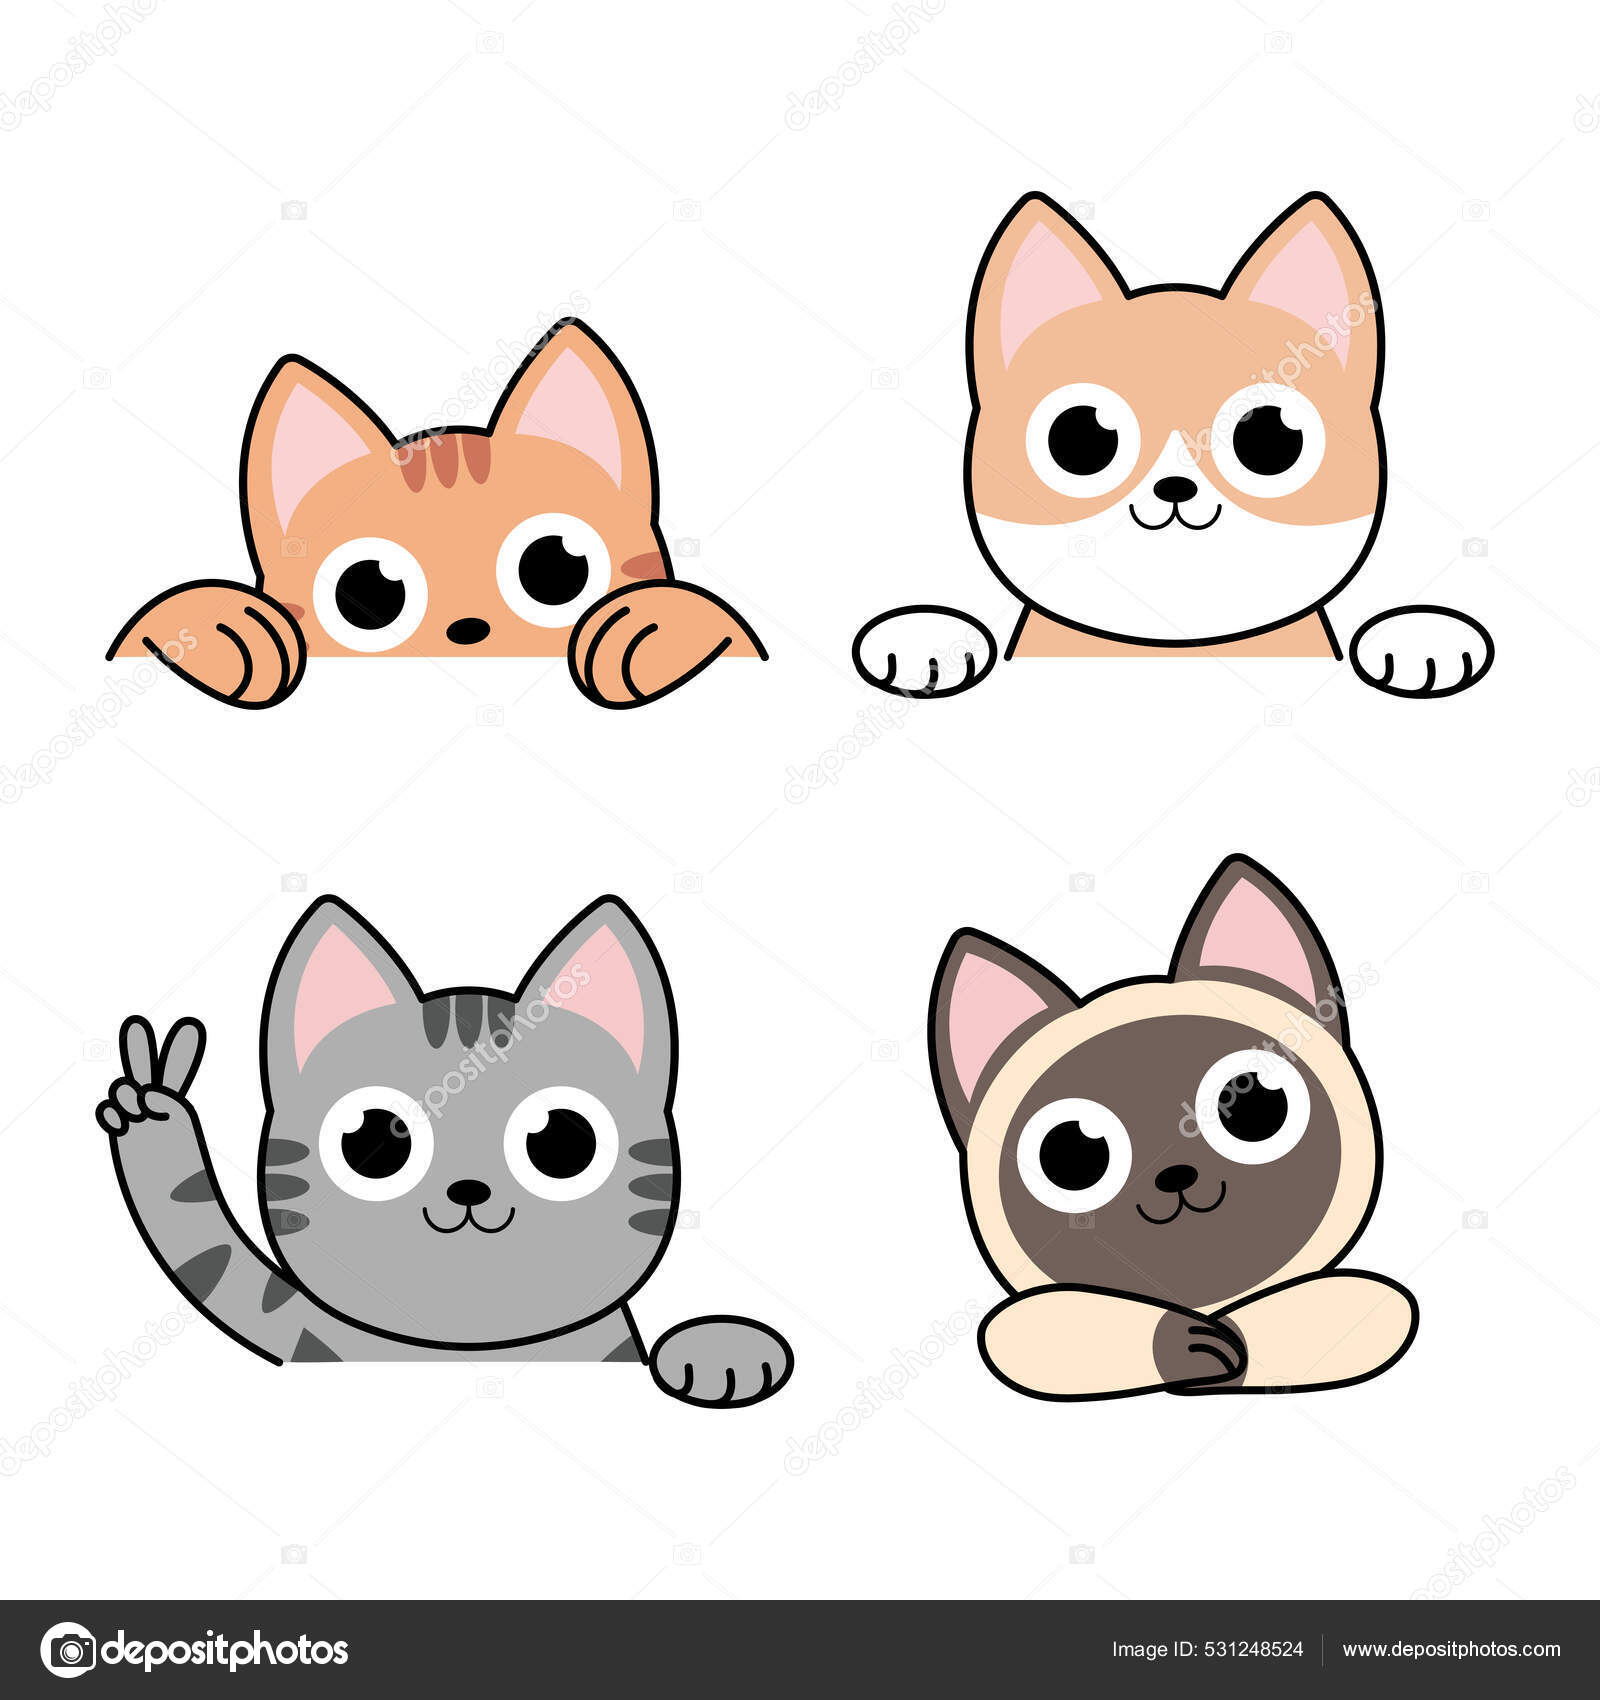 Cartoon cat. Funny Pets vector illustration. - Stock